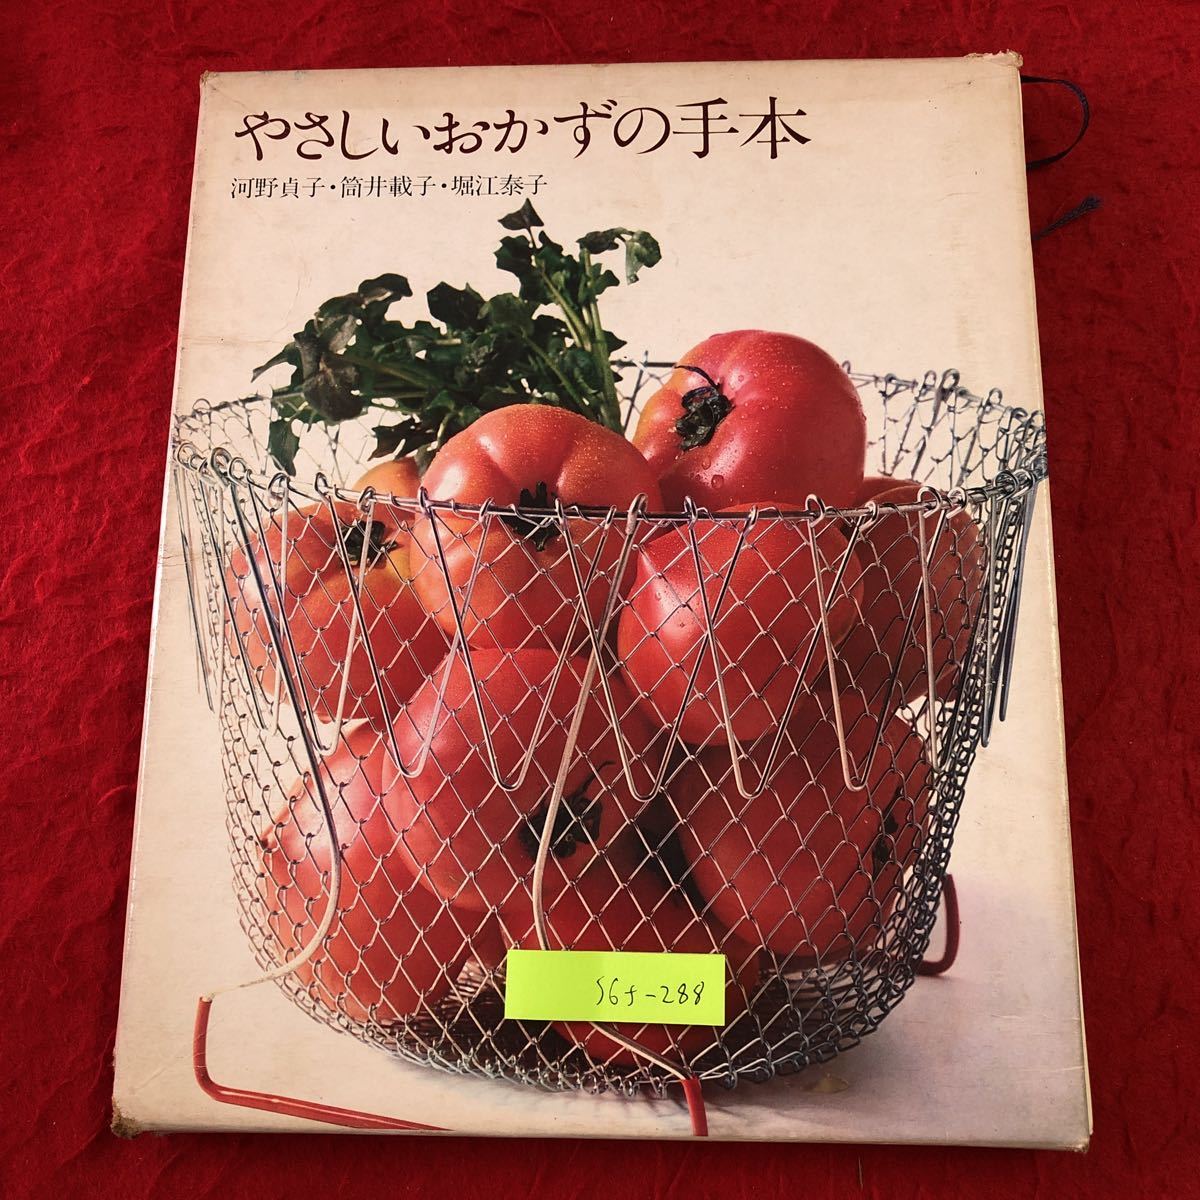 S6f-288 やさしいおかずの手本 クッキング・ブックス 1 1973年 発行 世界文化社 料理 レシピ シチュー 唐揚げ 厚焼き卵 ステーキ 餃子_箱に破れあり